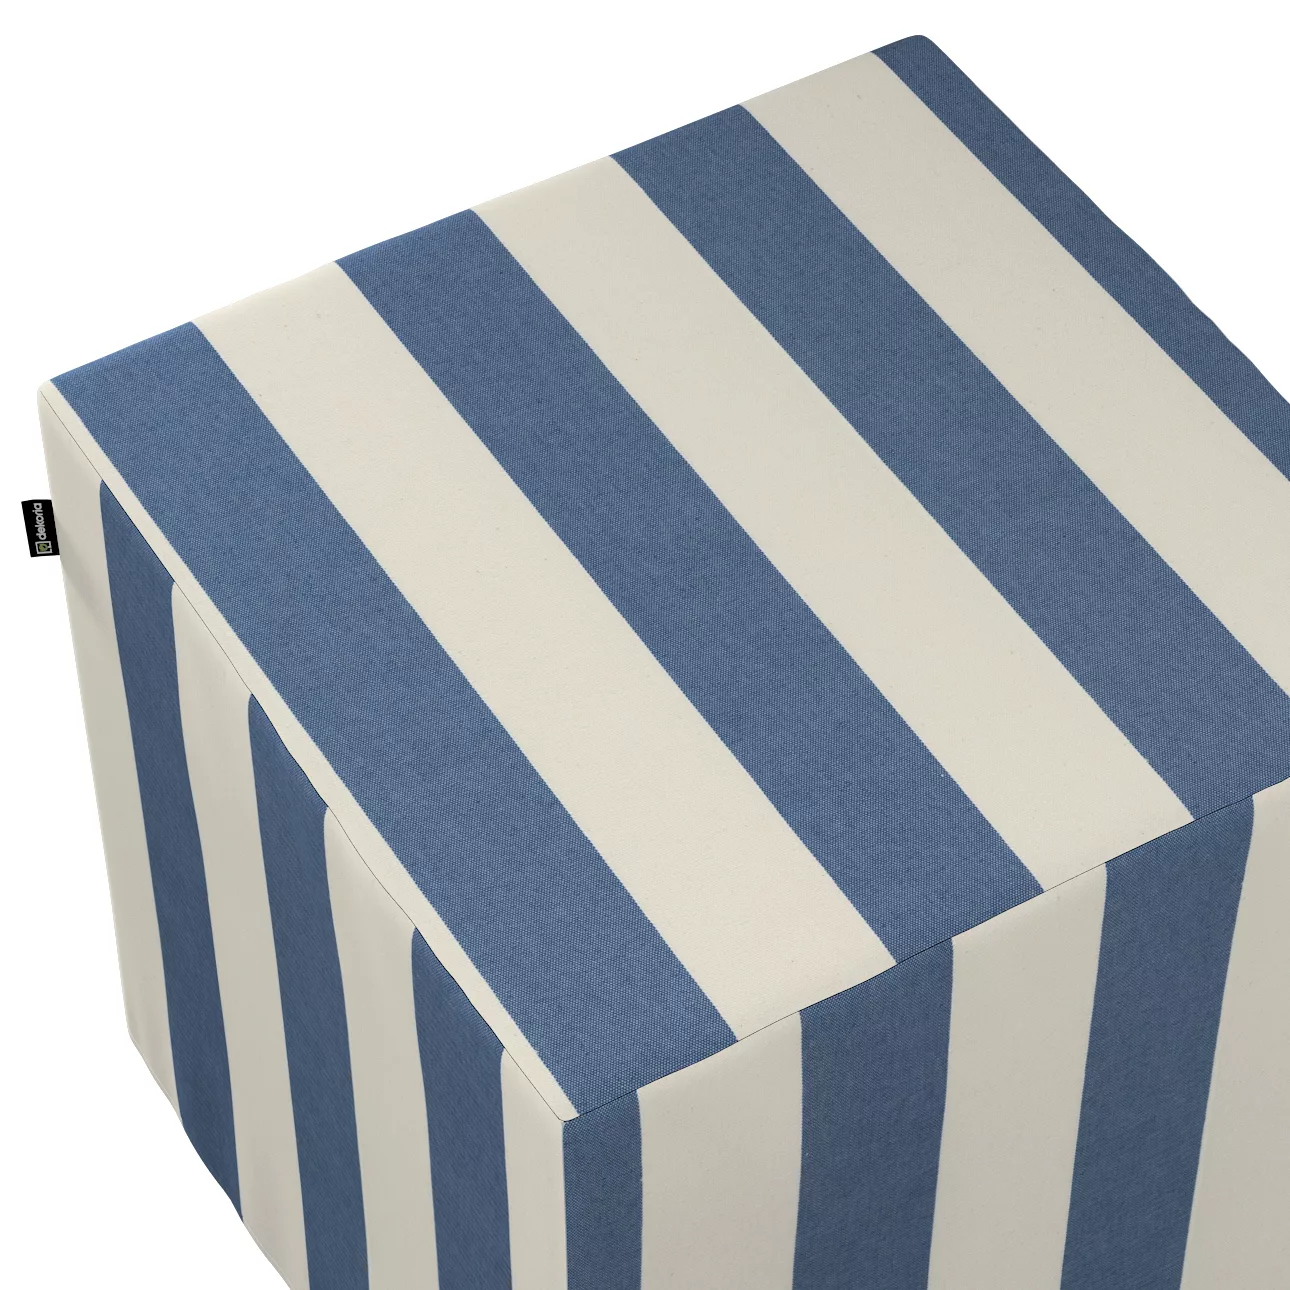 Sitzwürfel, blau-weiß, 40 x 40 x 40 cm, Quadro (143-90) günstig online kaufen